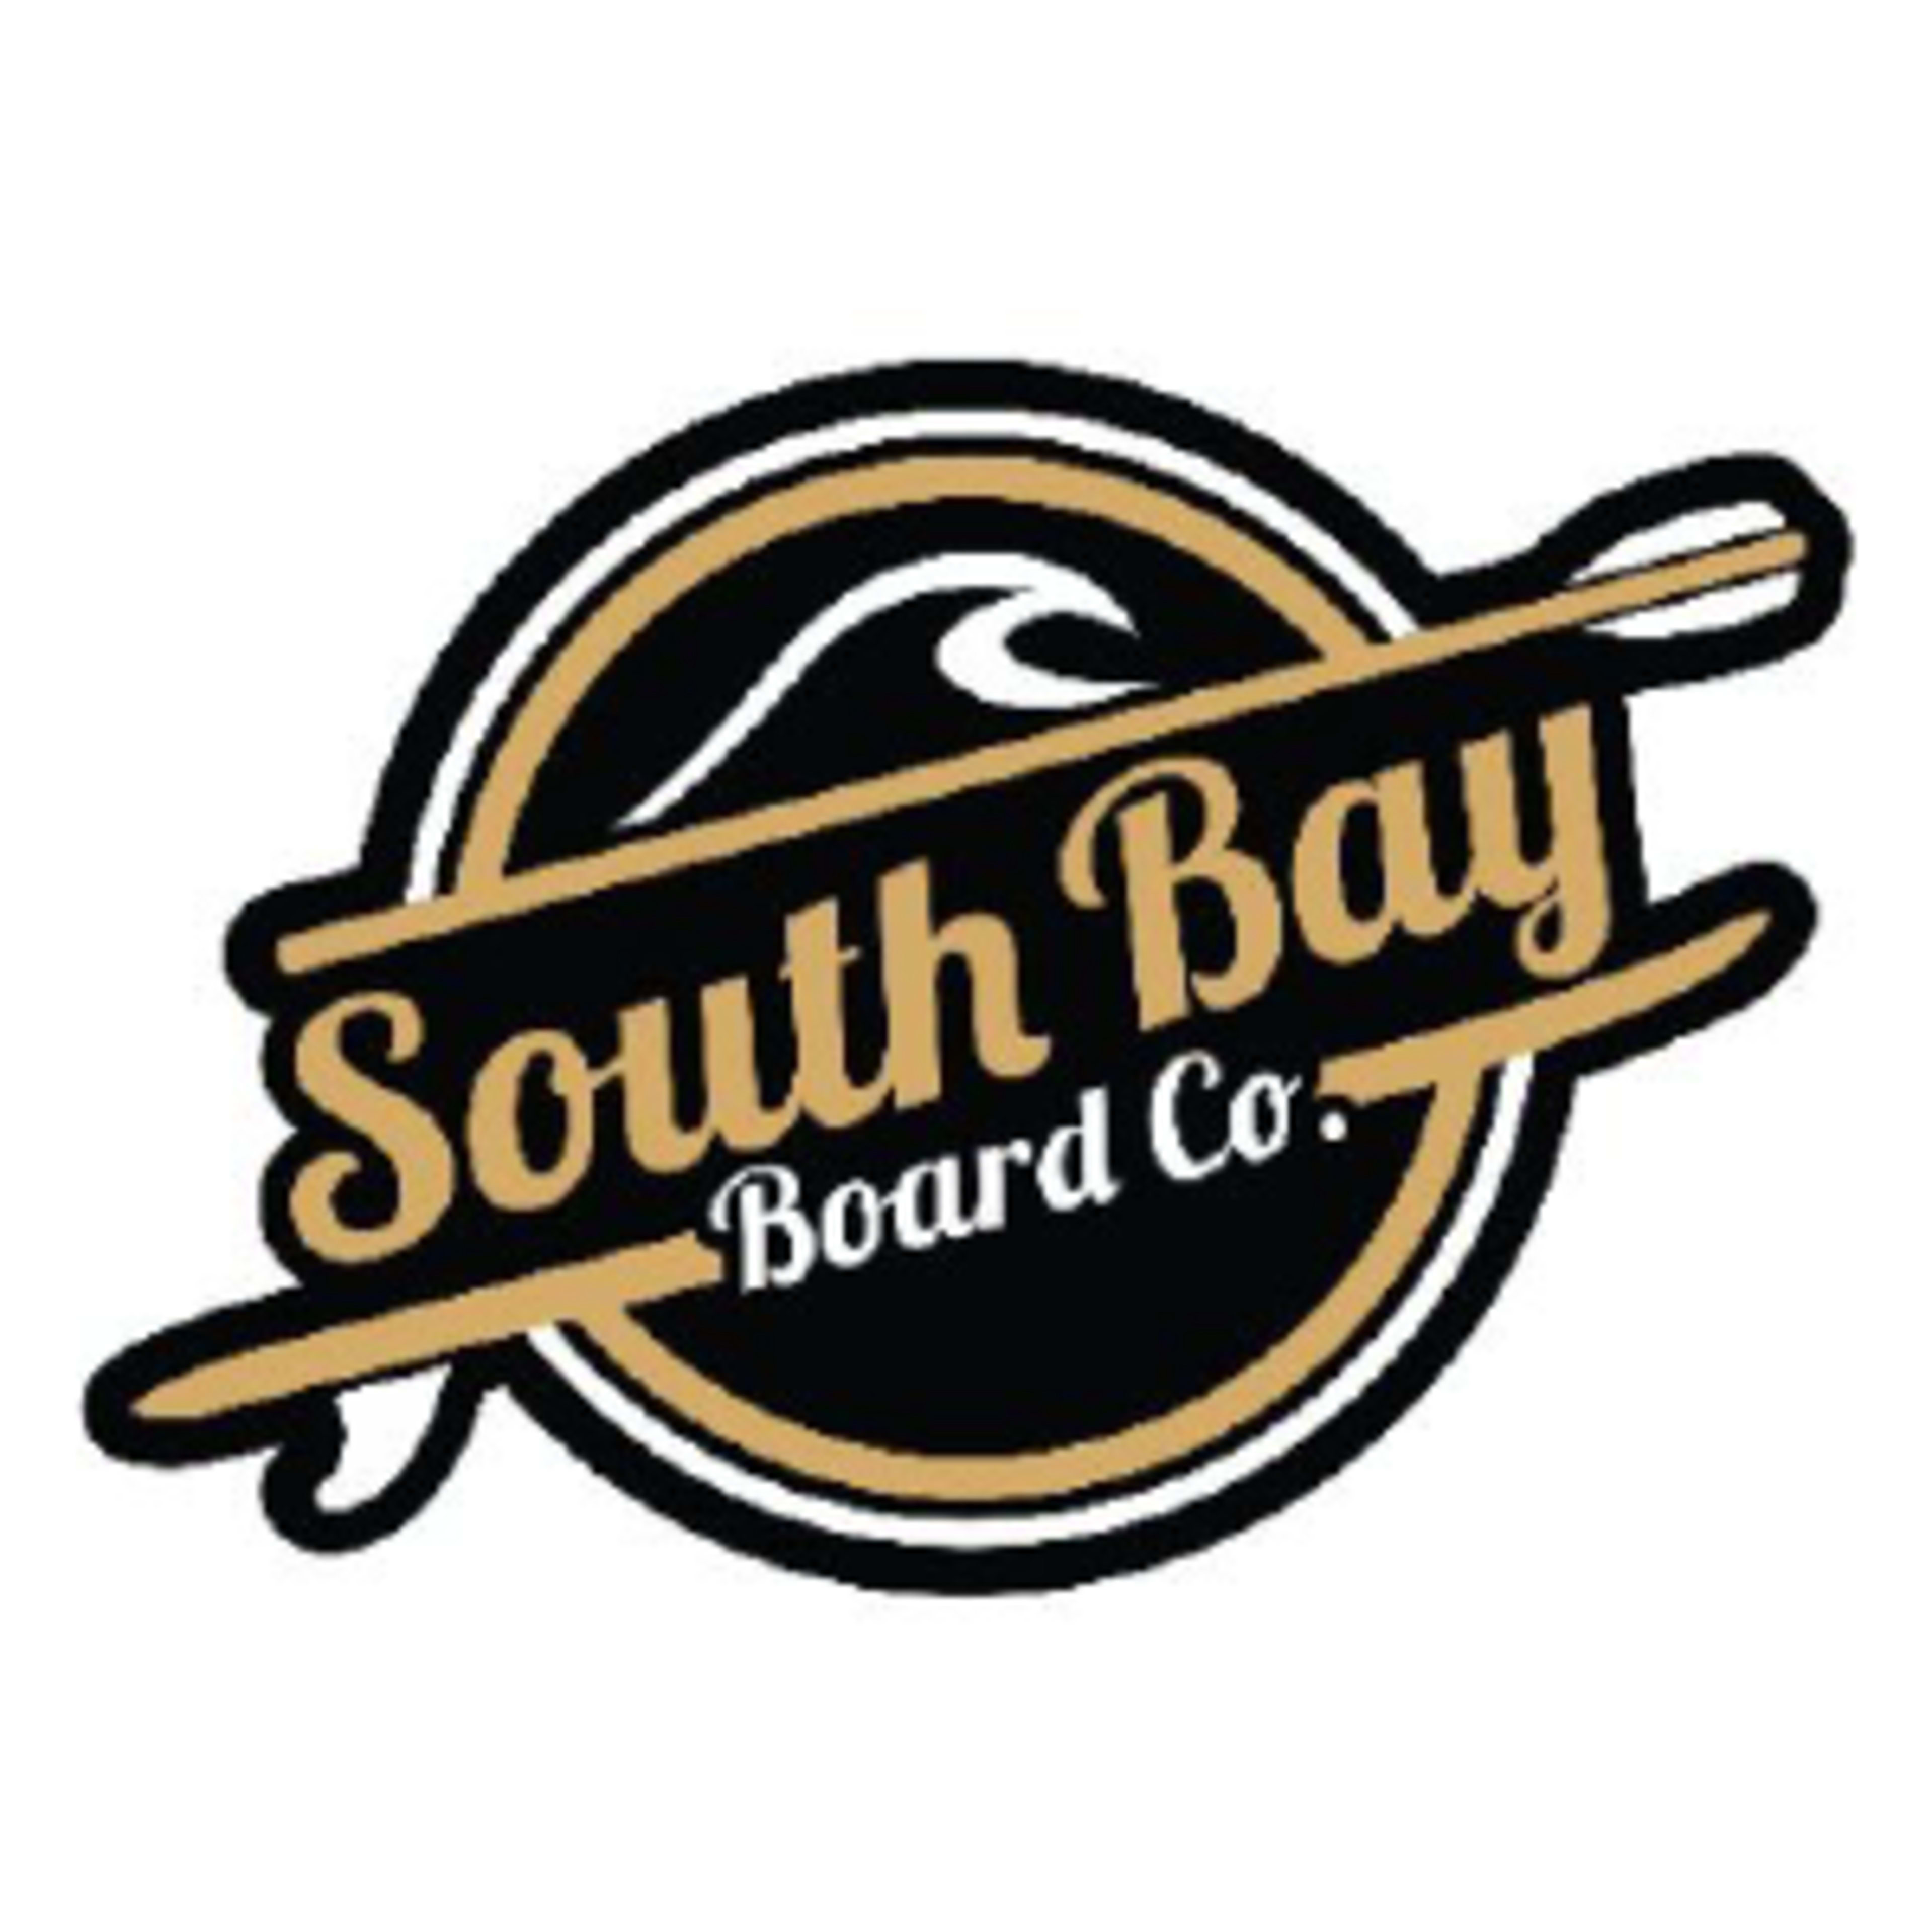 South Bay Board Co. Code